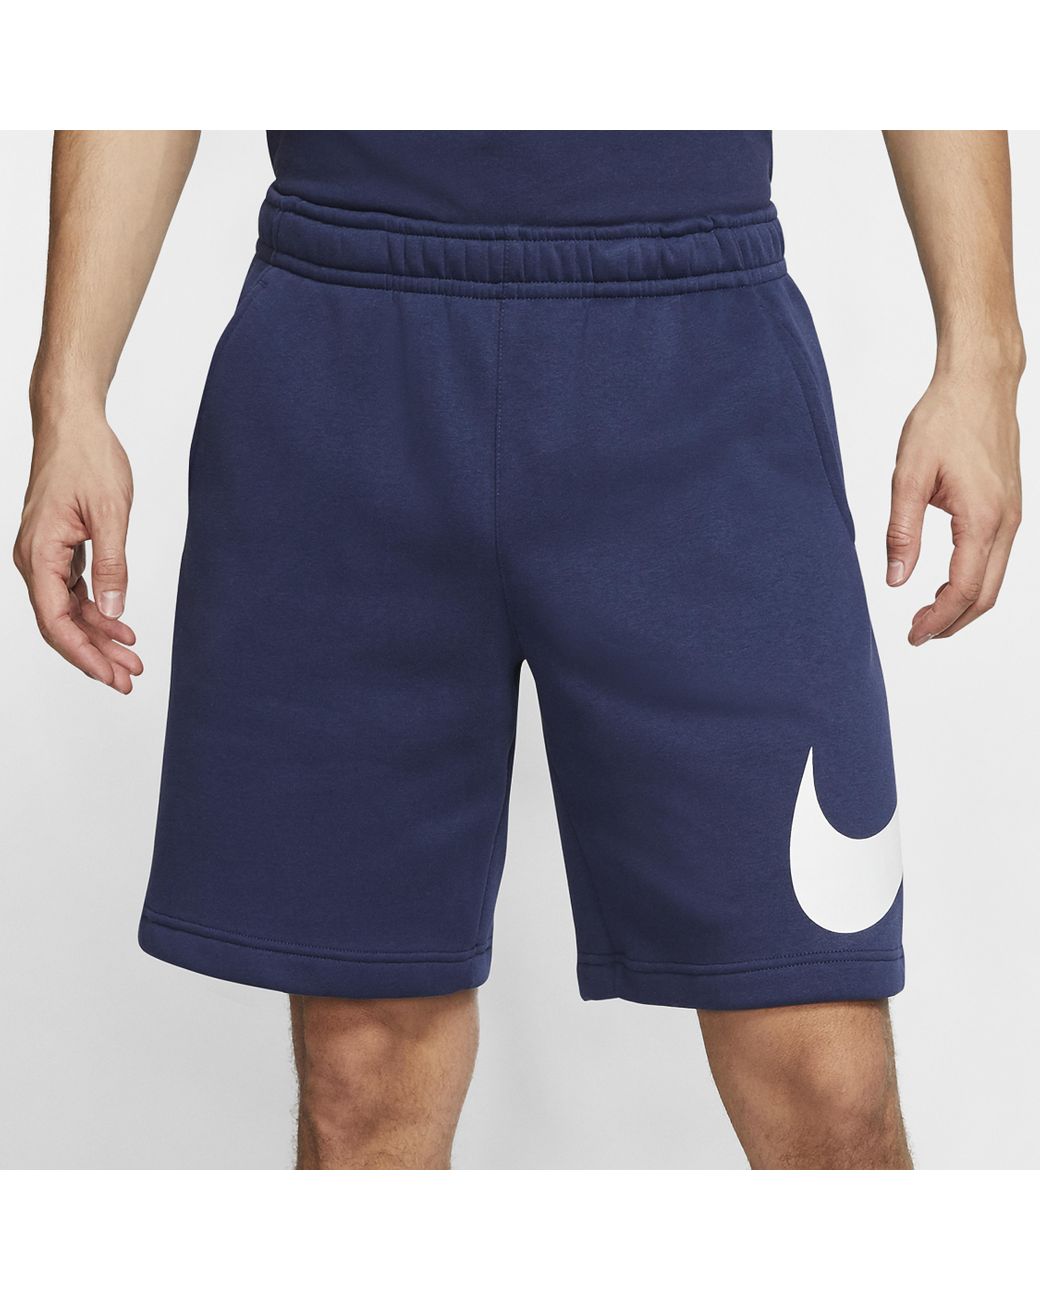 Nike Fleece Gx Club Shorts in Midnight Navy/White (Blue) for Men - Save 13%  - Lyst